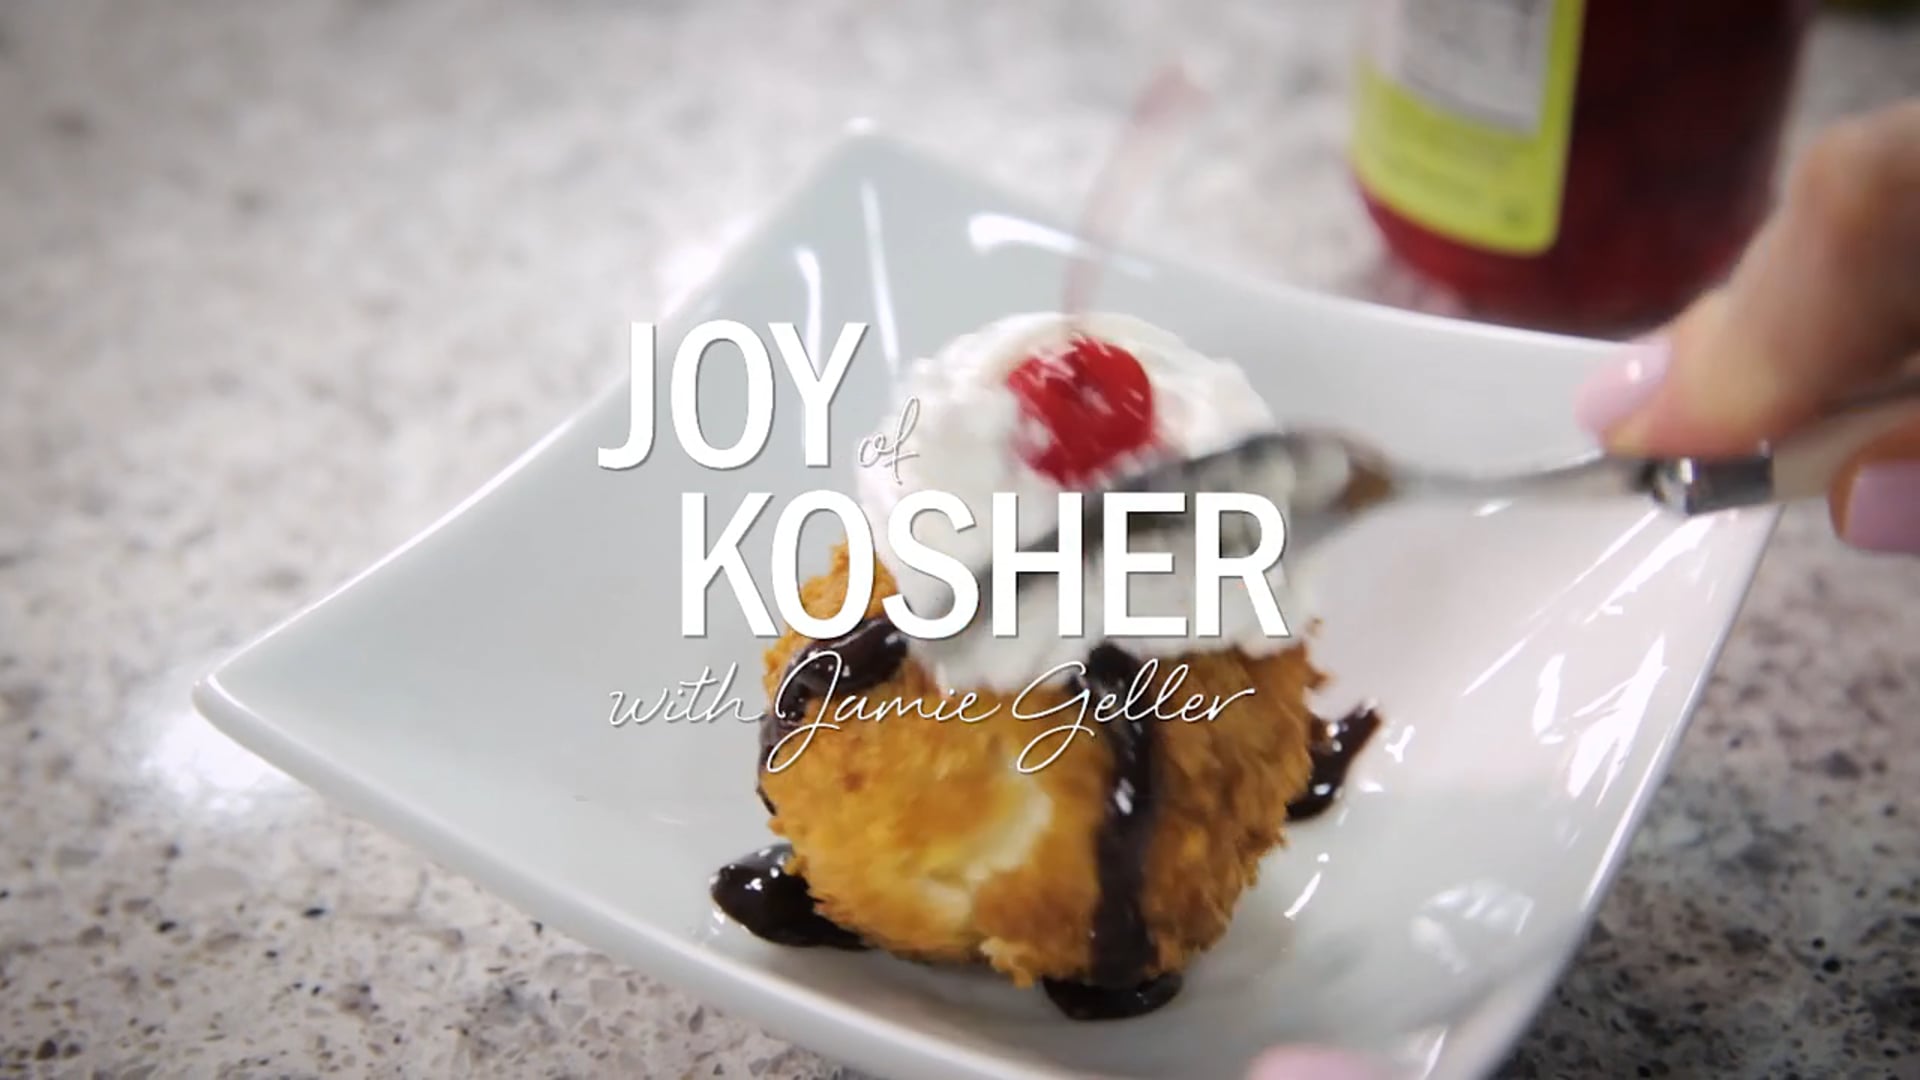 JAMIE GELLER & JOY OF KOSHER - Fired Ice-cream